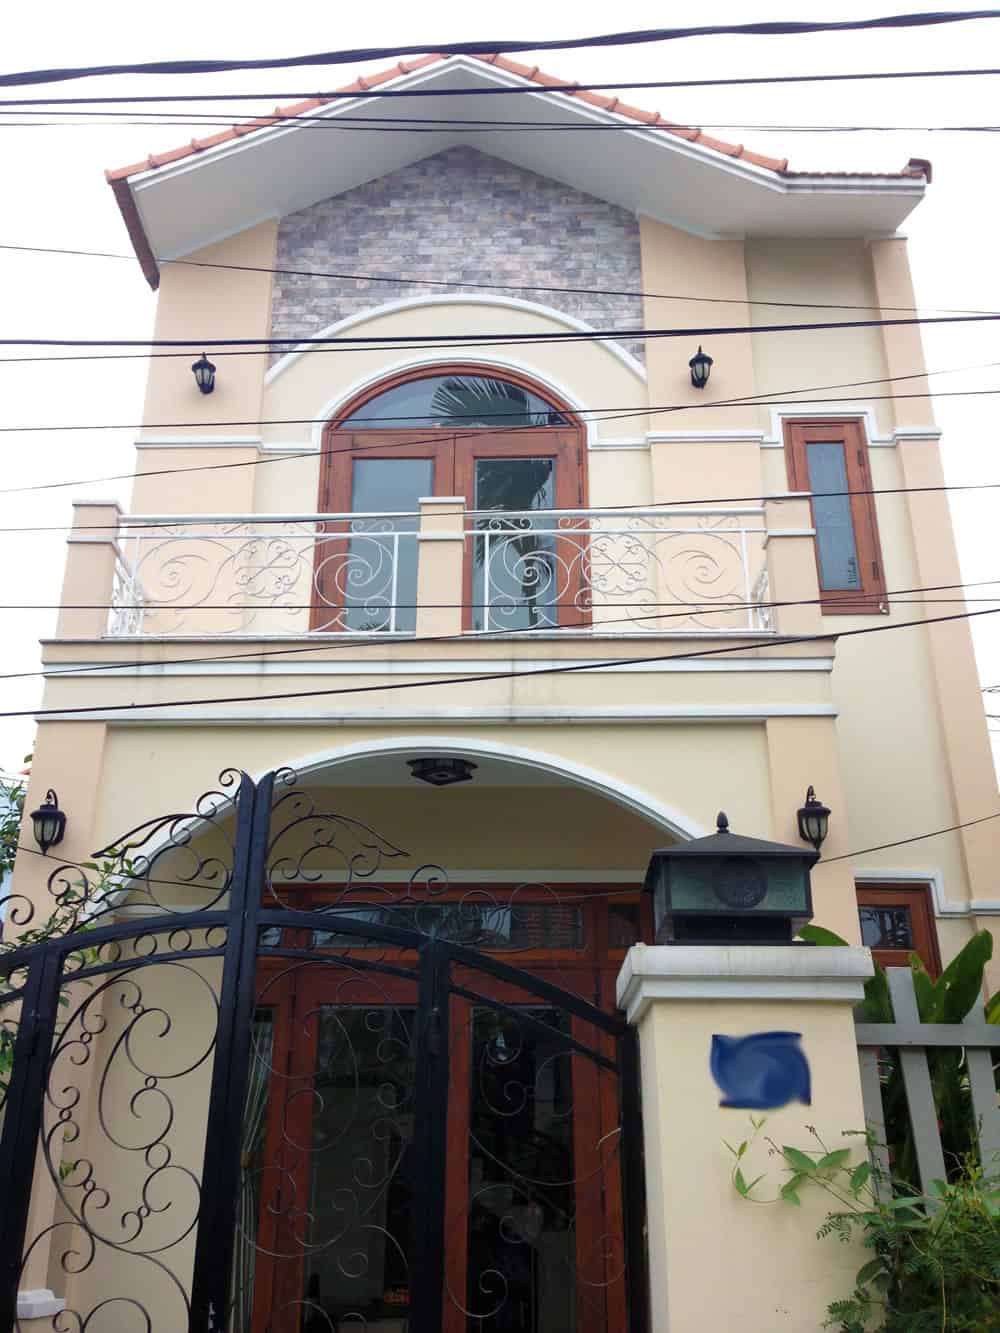 House in Hoi An